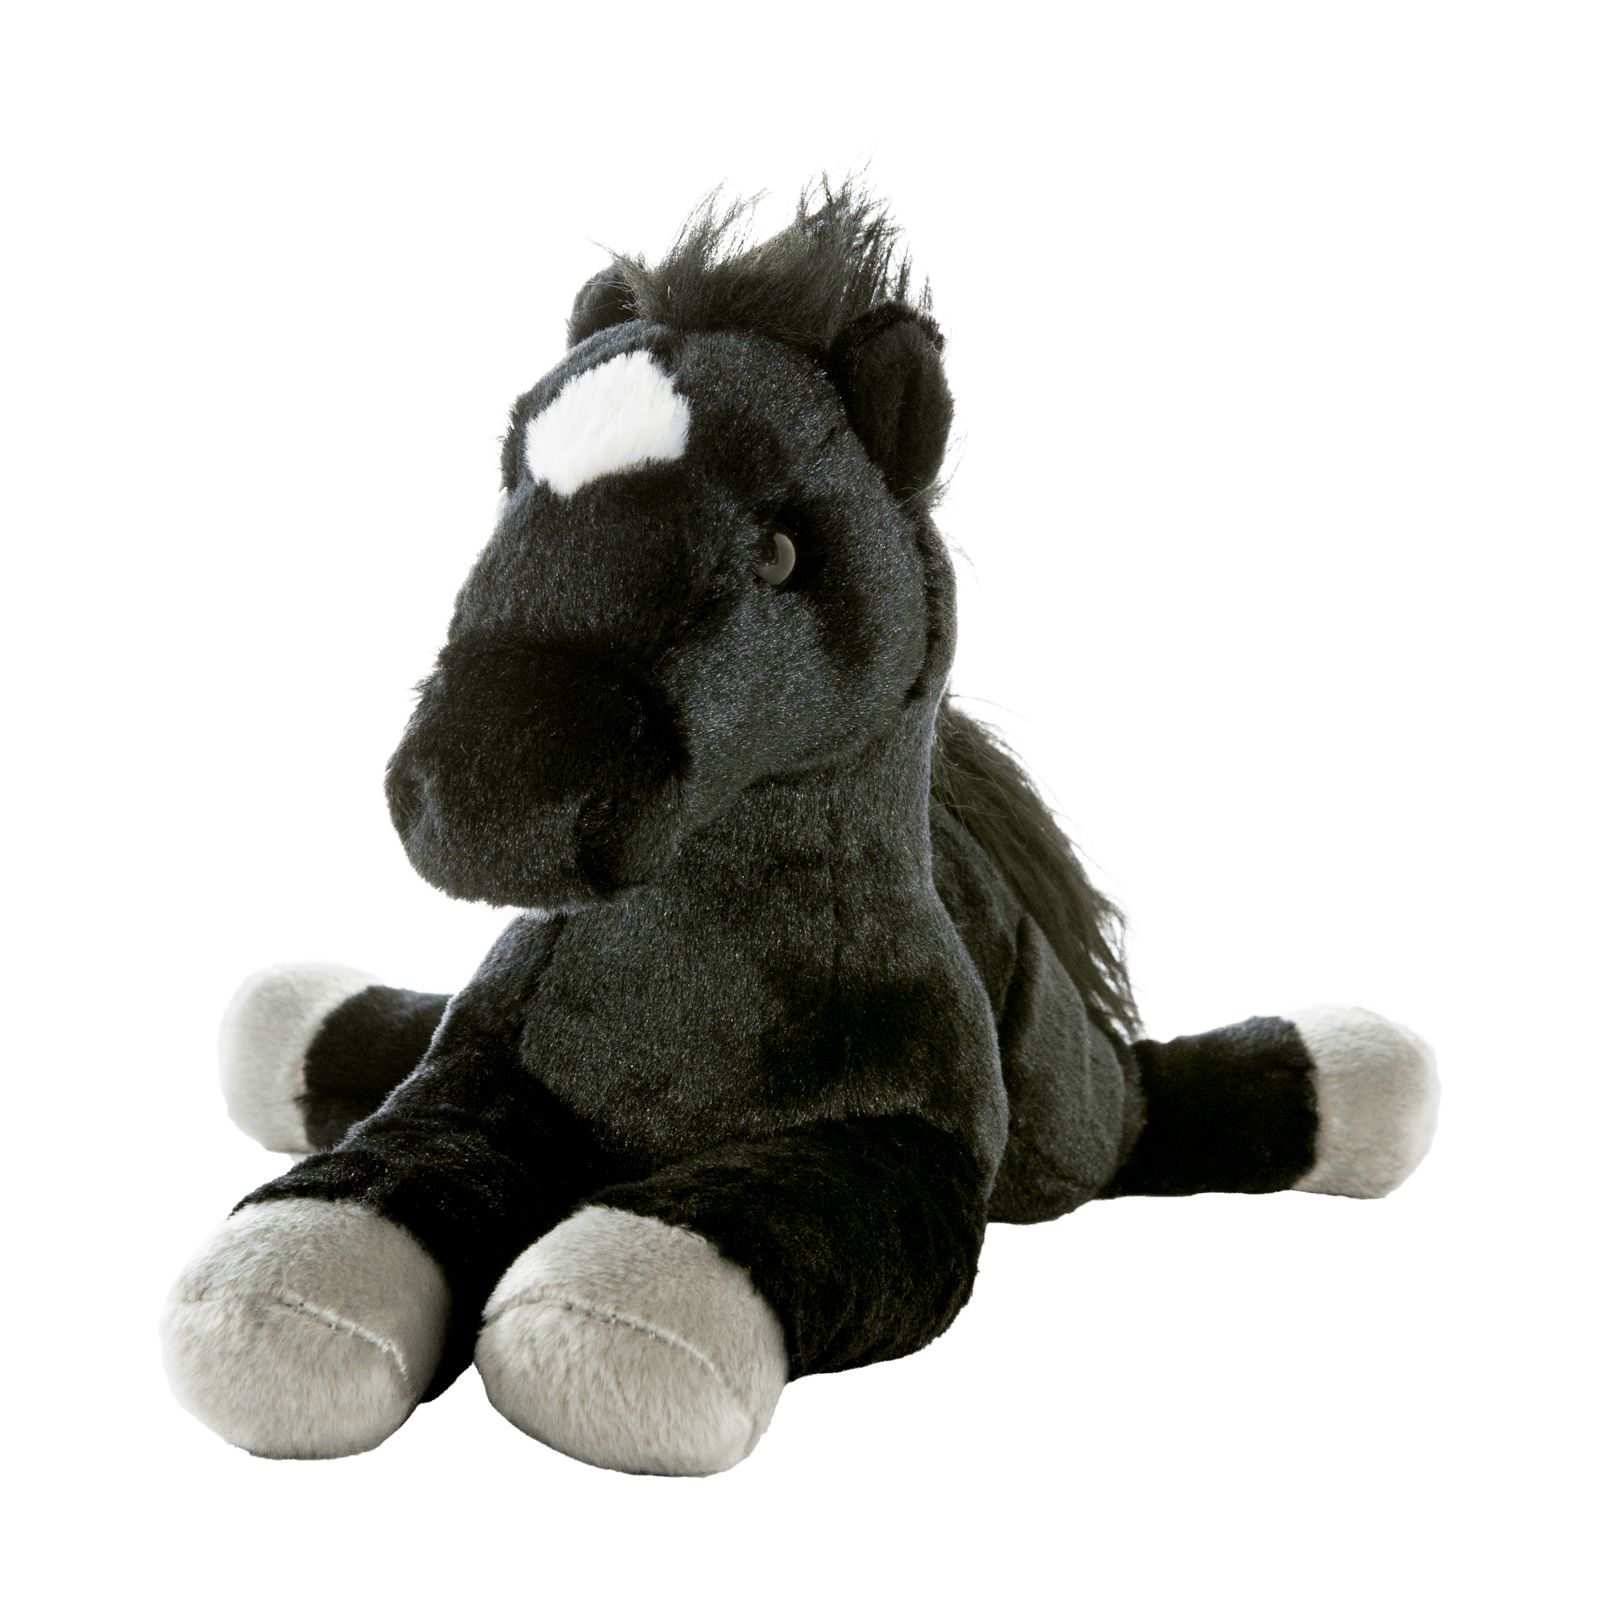 stuffed horse toy